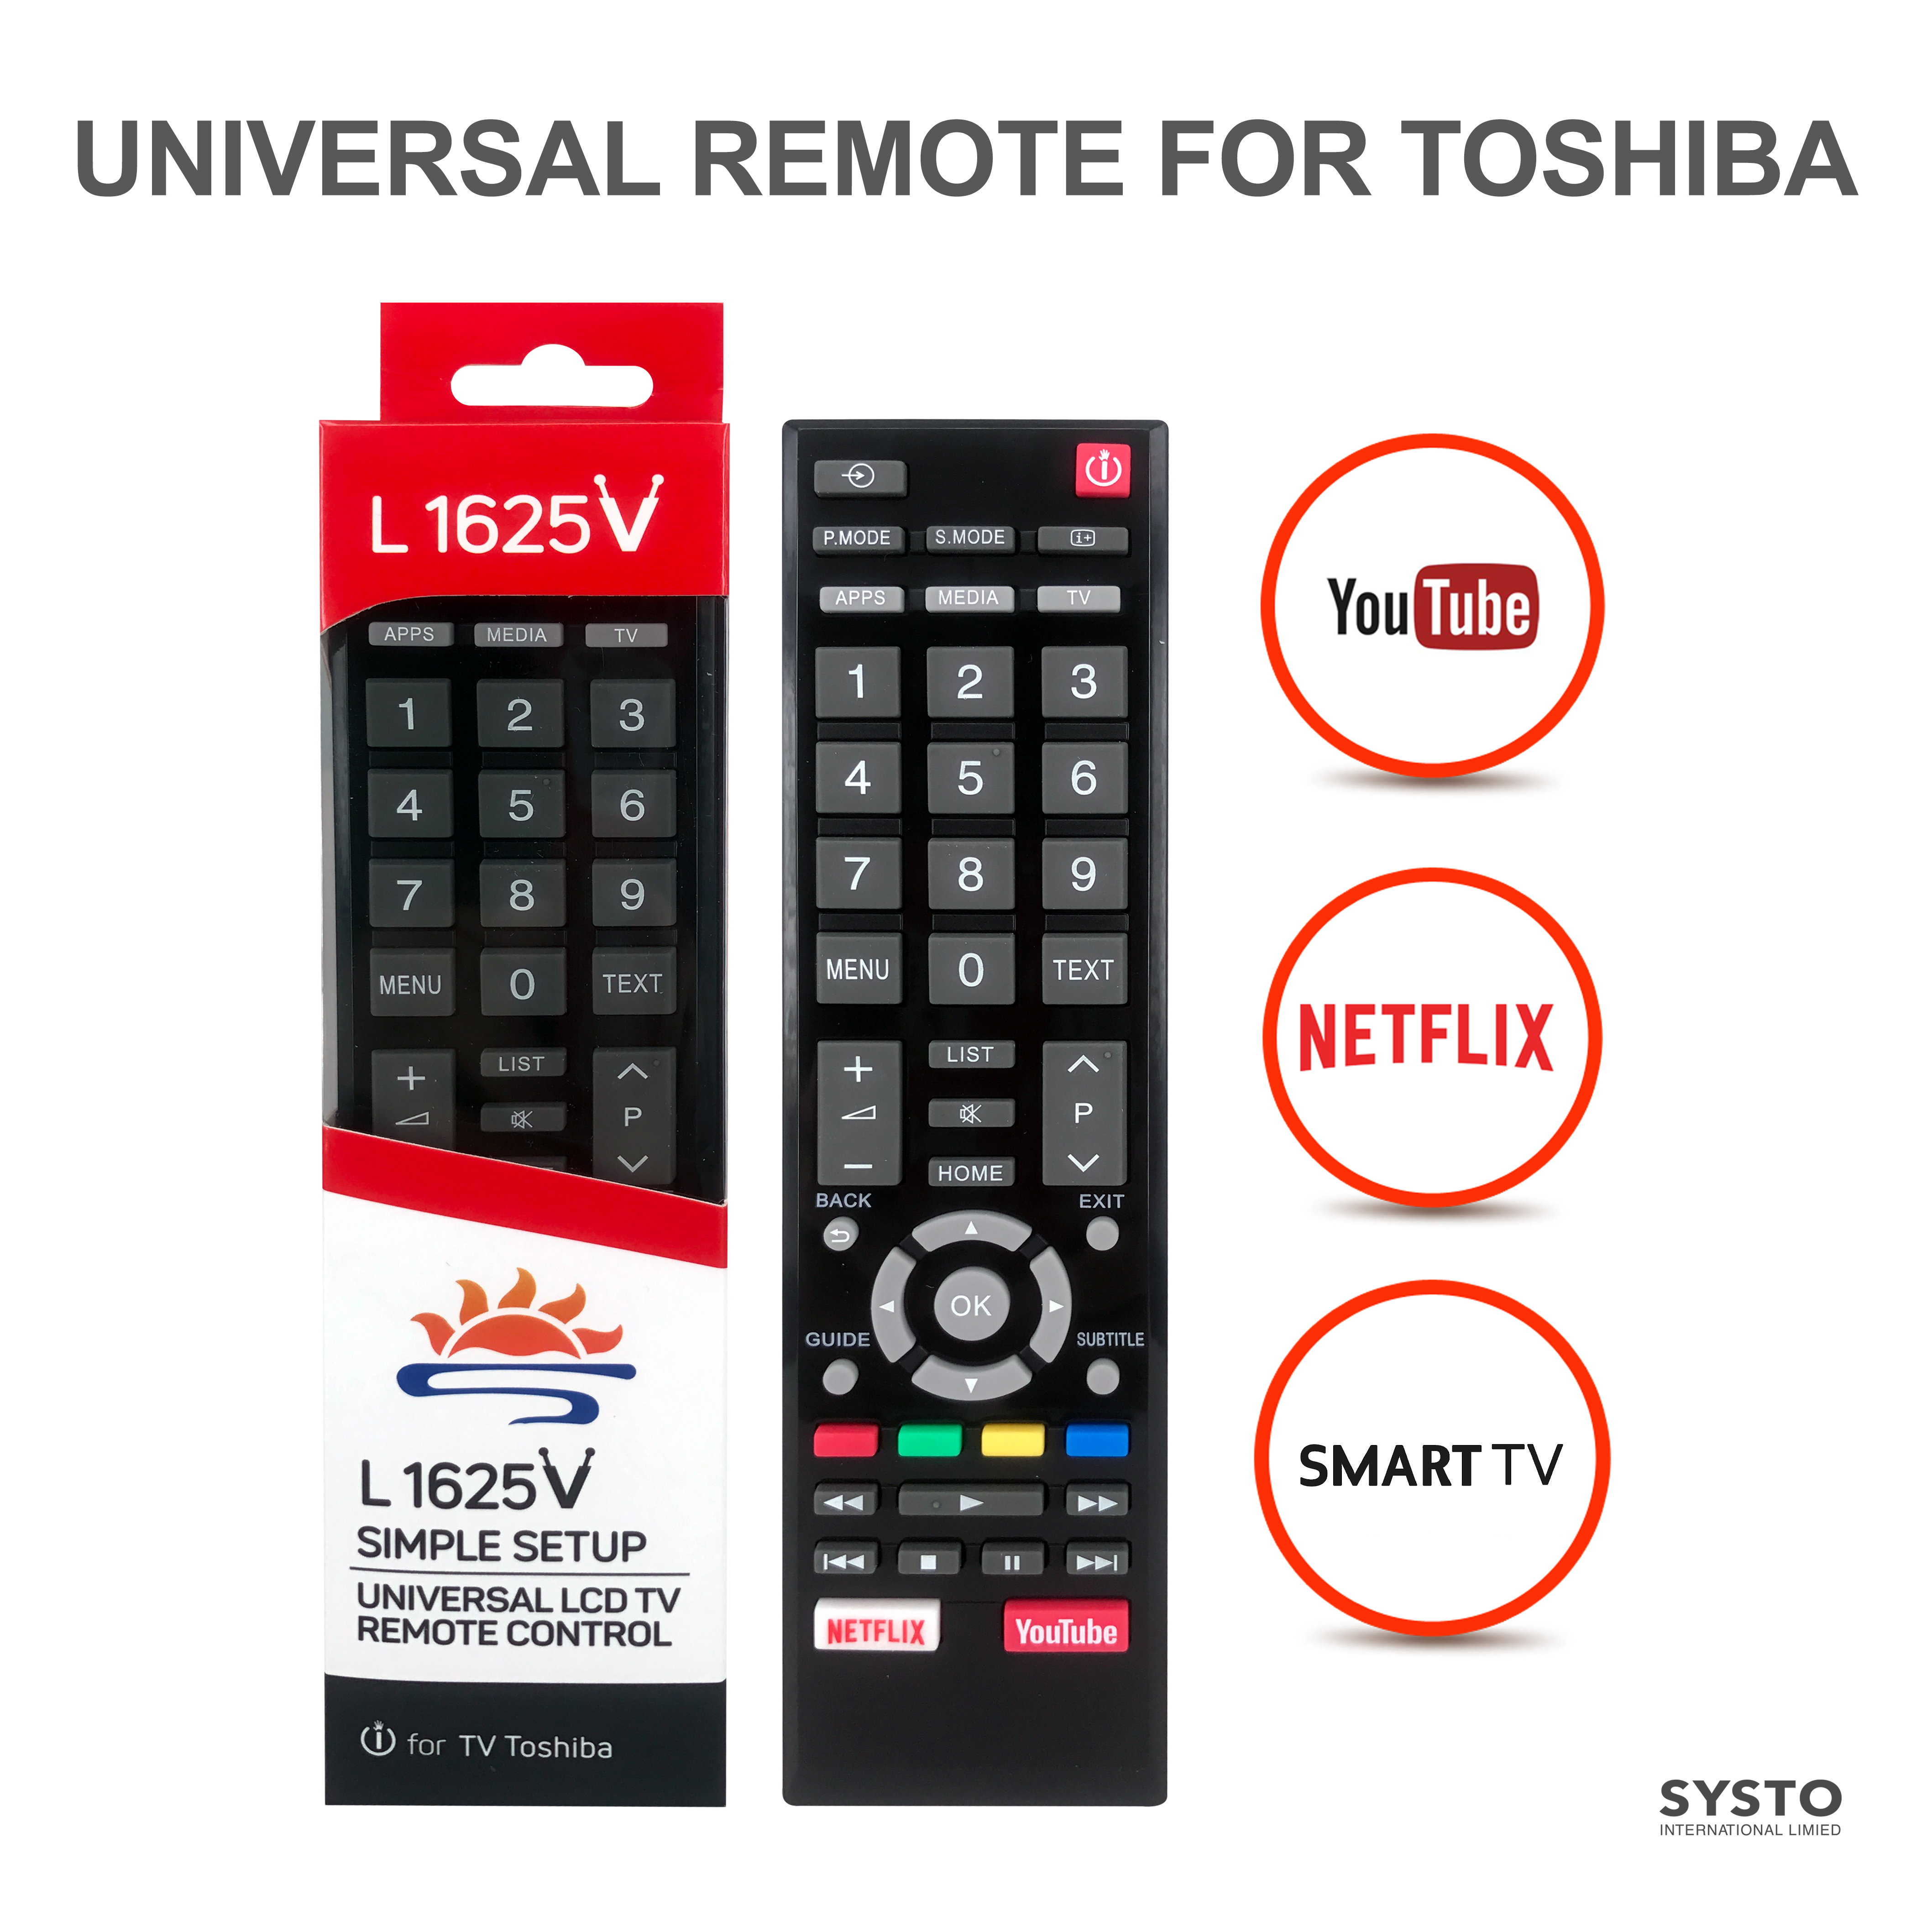 UNIVERSAL REMOTE CONTROL TOSHIBA TVS NETFLIX YOUTUBE